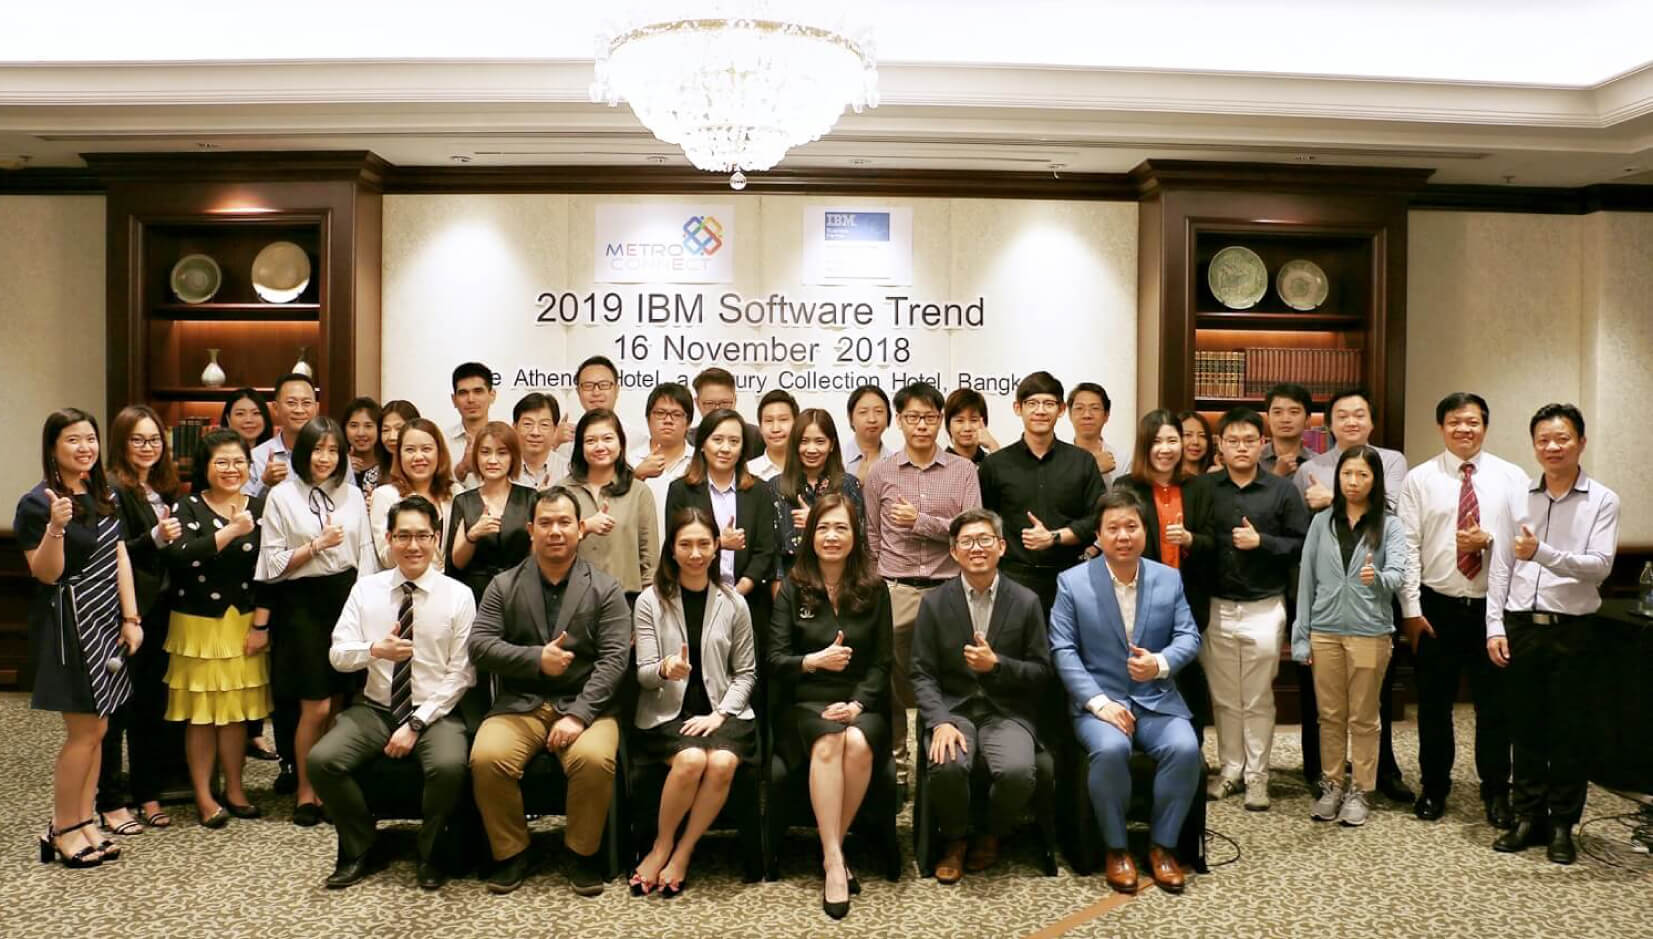 IBM Software Trend 2019